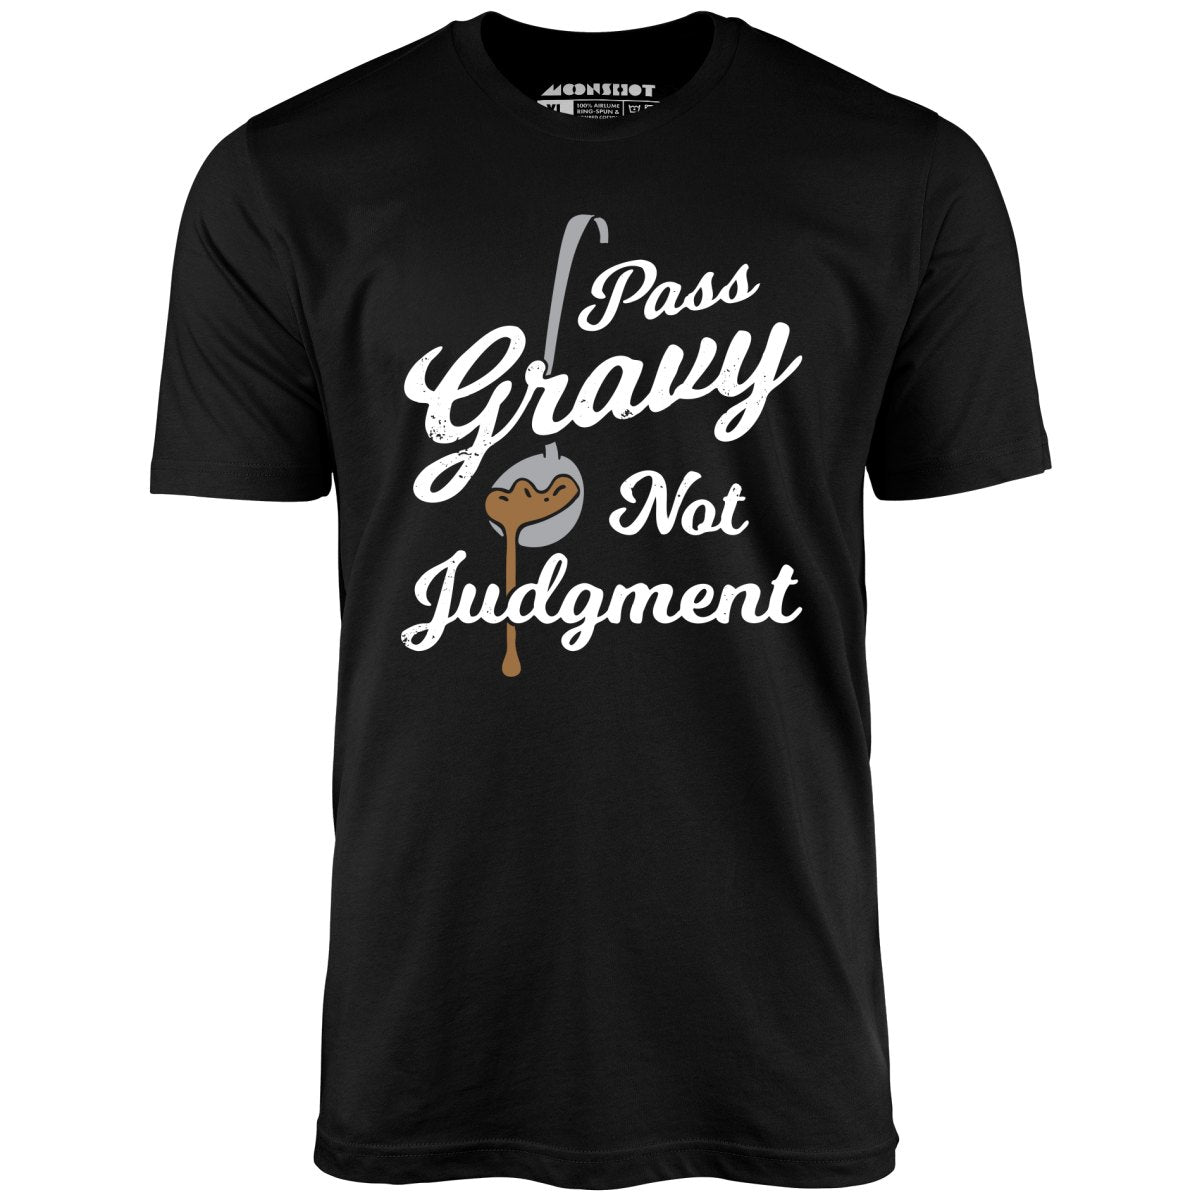 Pass Gravy Not Judgment - Unisex T-Shirt